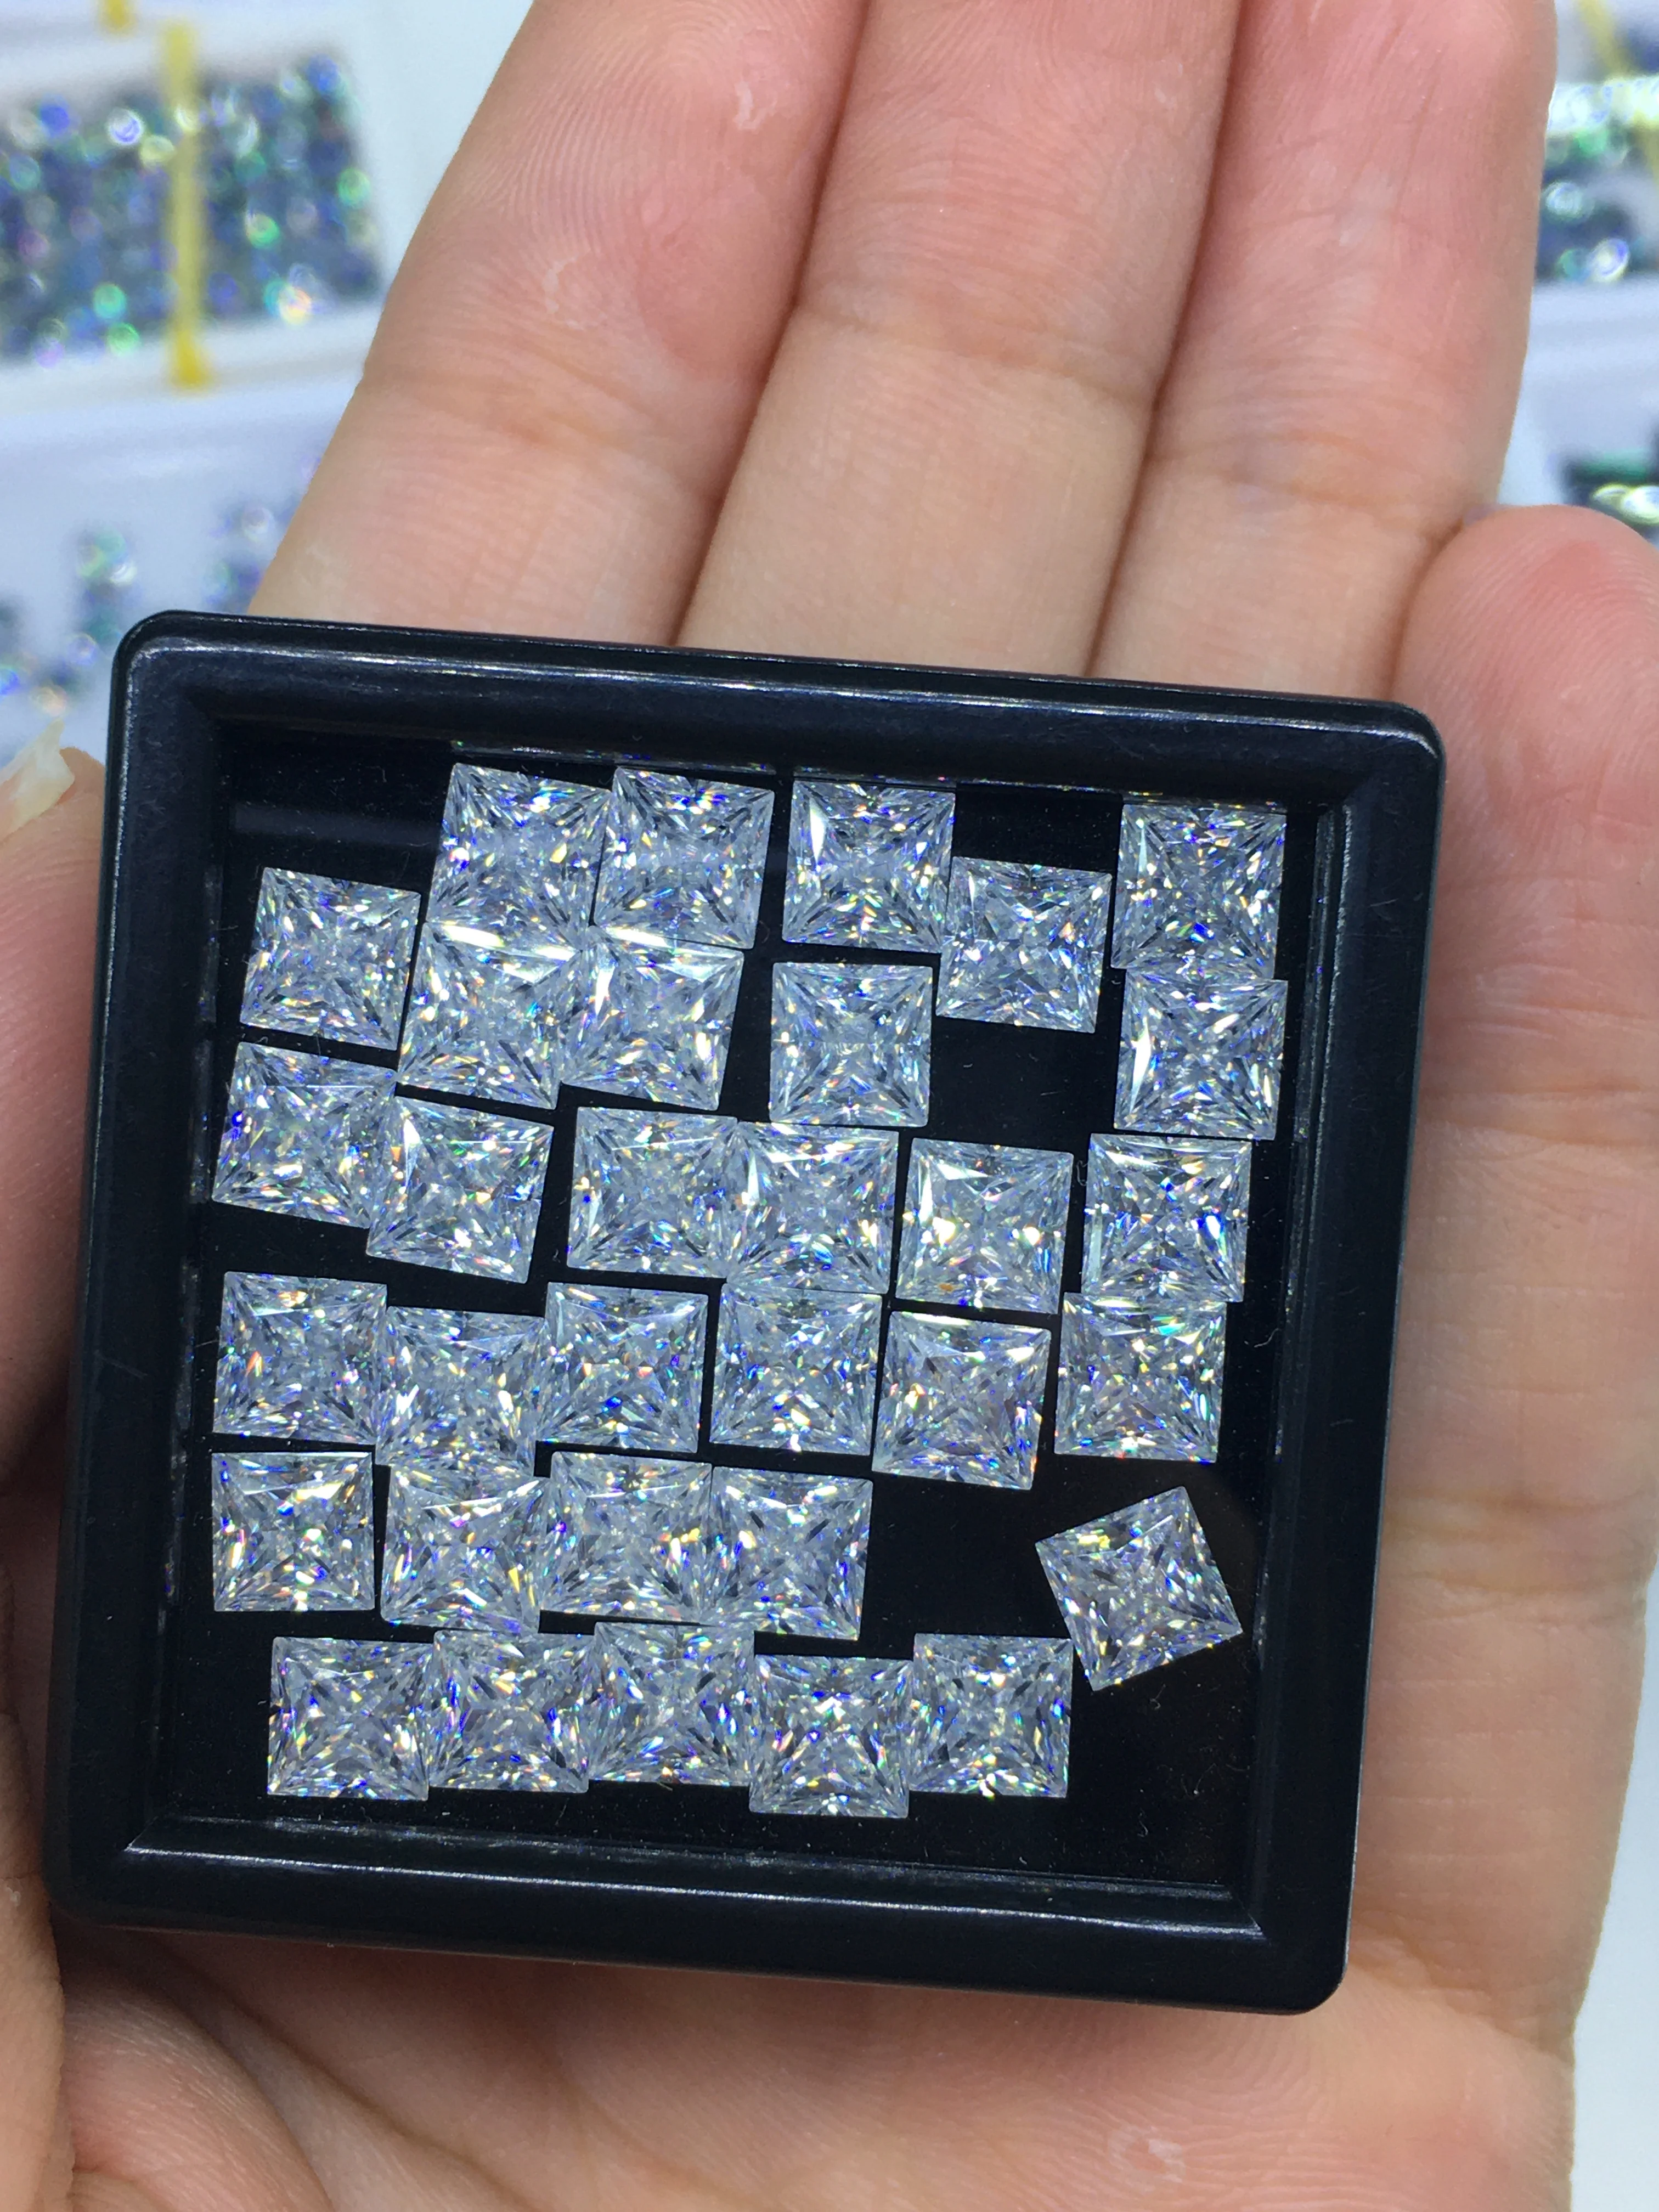 

Holycome DEF VVS1 Princess Cut Gemstones GRA CertificatedMoissanite Factory Supplier Pass Lab Grown Moissanite Diamond Tester